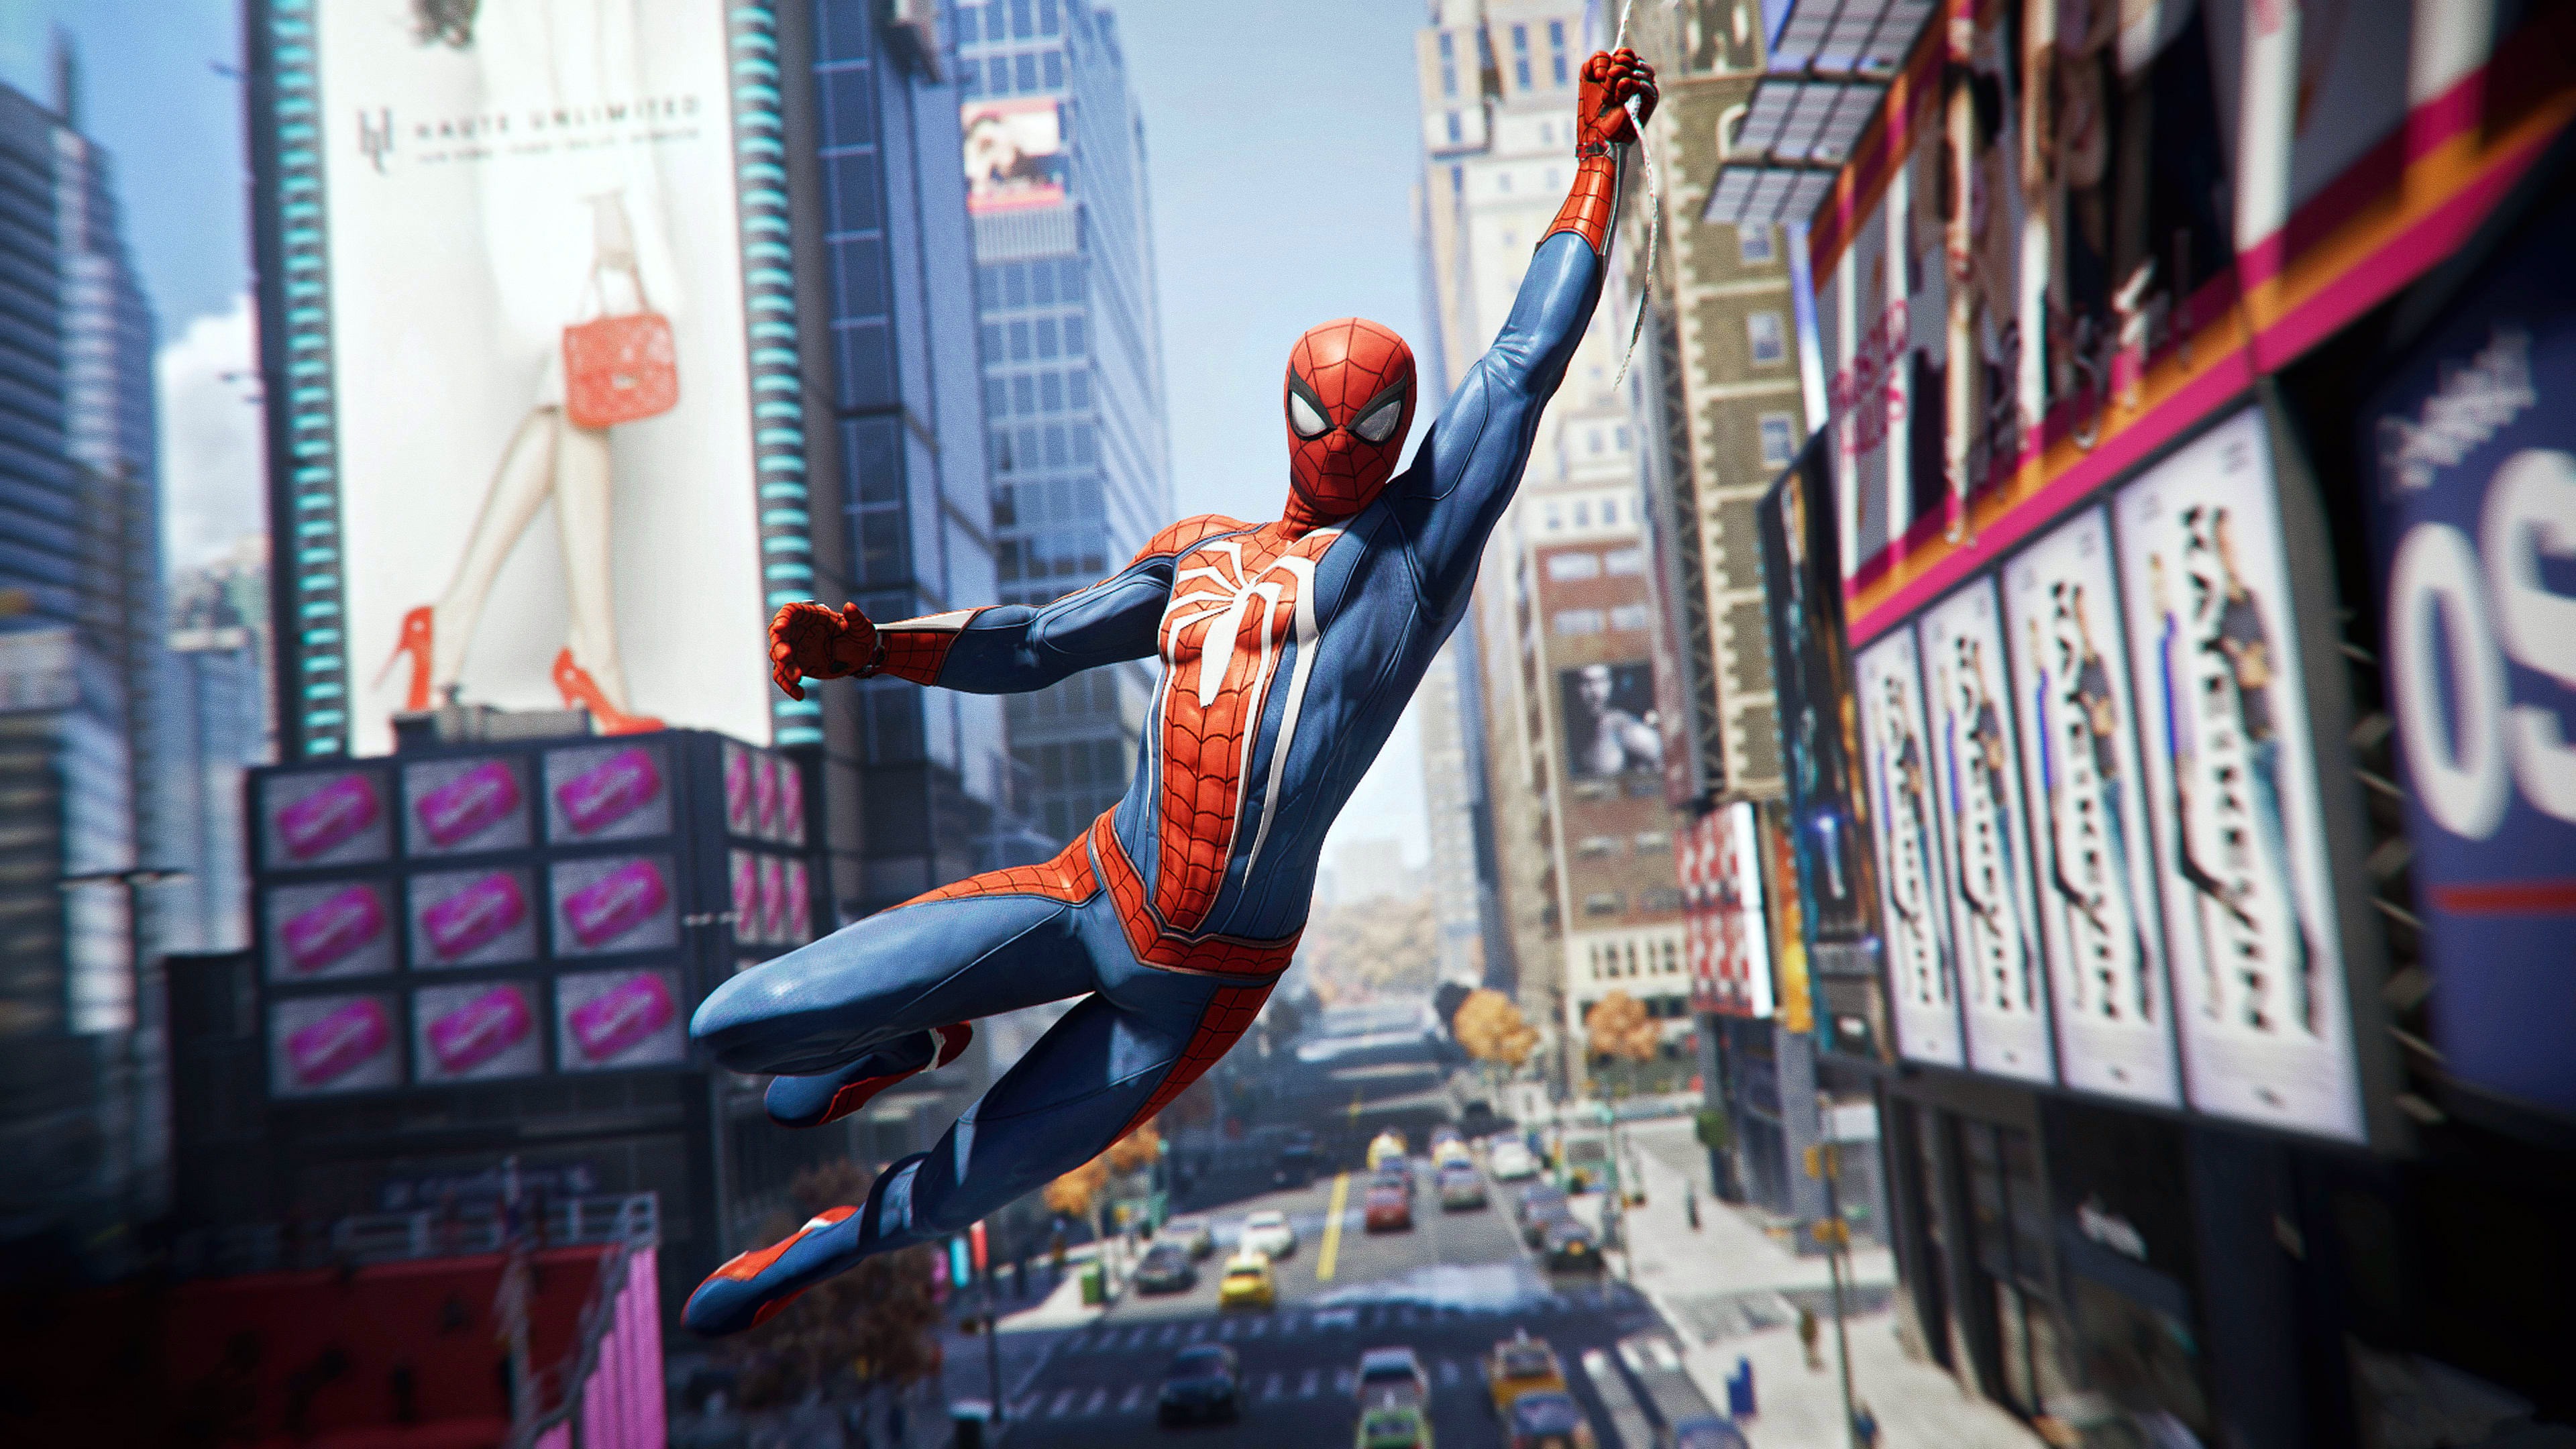 Spiderman 2018 ps4 Game HD Poster Wallpaper for Desktop